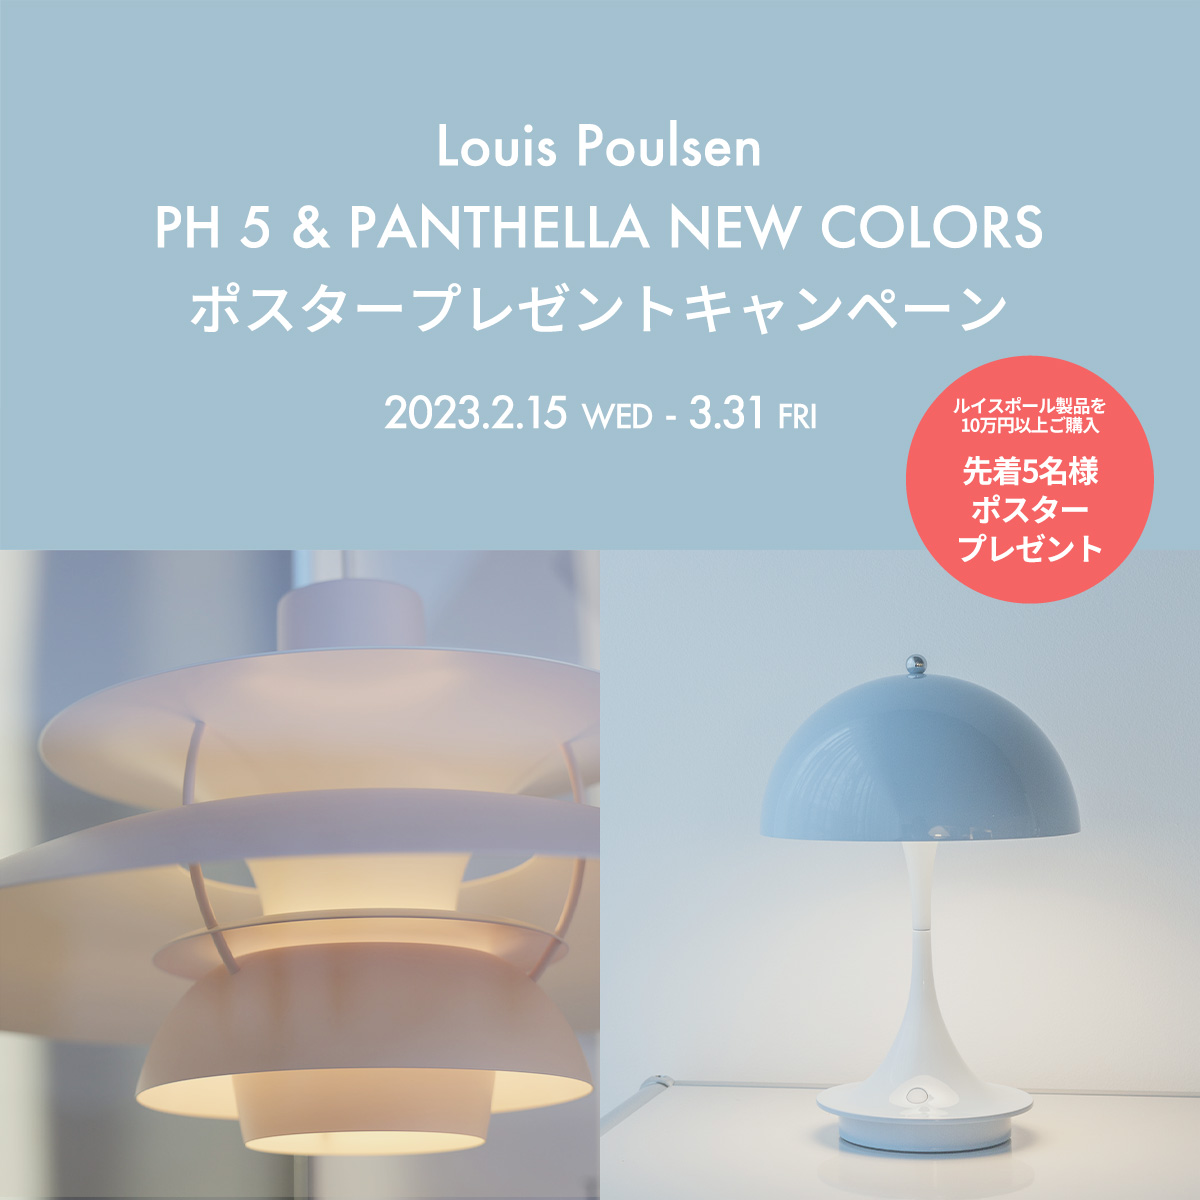 Louis Poulsen - PH 5 & Panthella New colors ポスター プレゼントキャンペーン